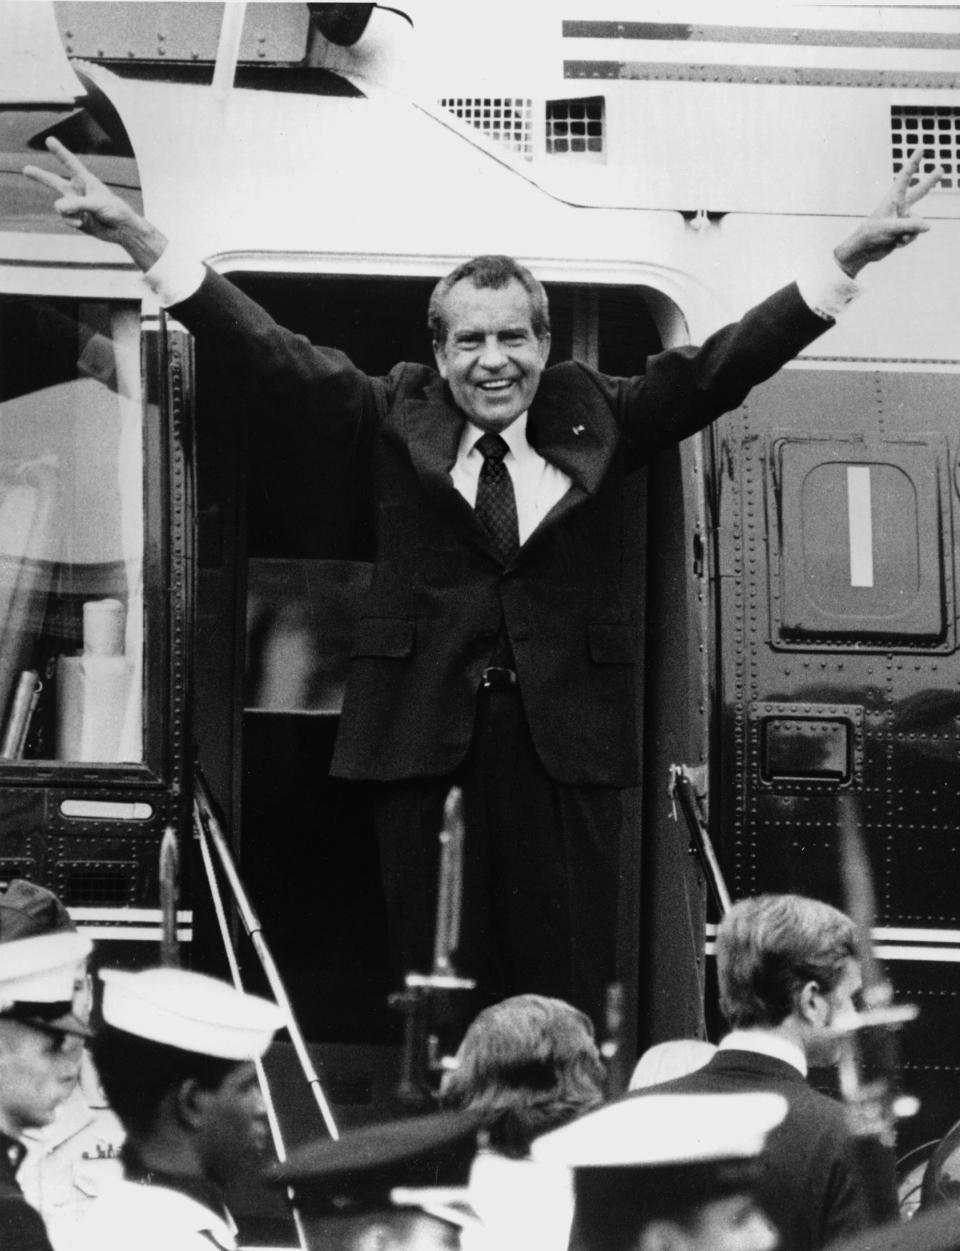 Richard Nixon says goodbye after resigning the presidency on Aug. 9, 1974.